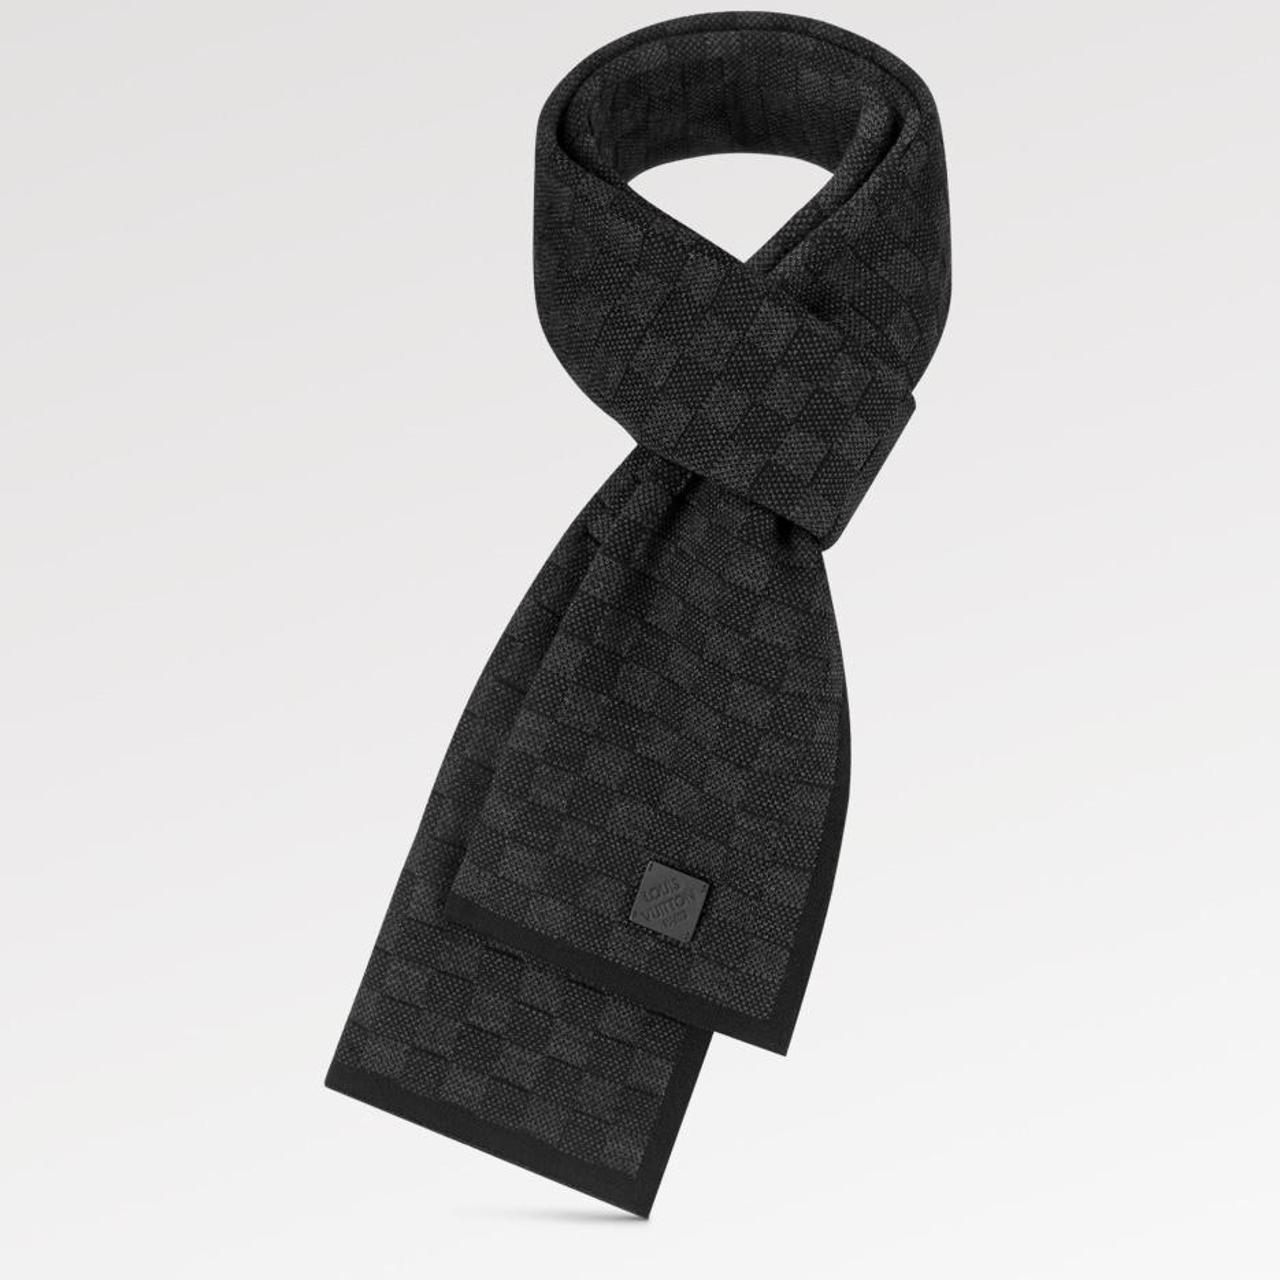 Louis Vuitton petite damier black and grey scarf. - Depop